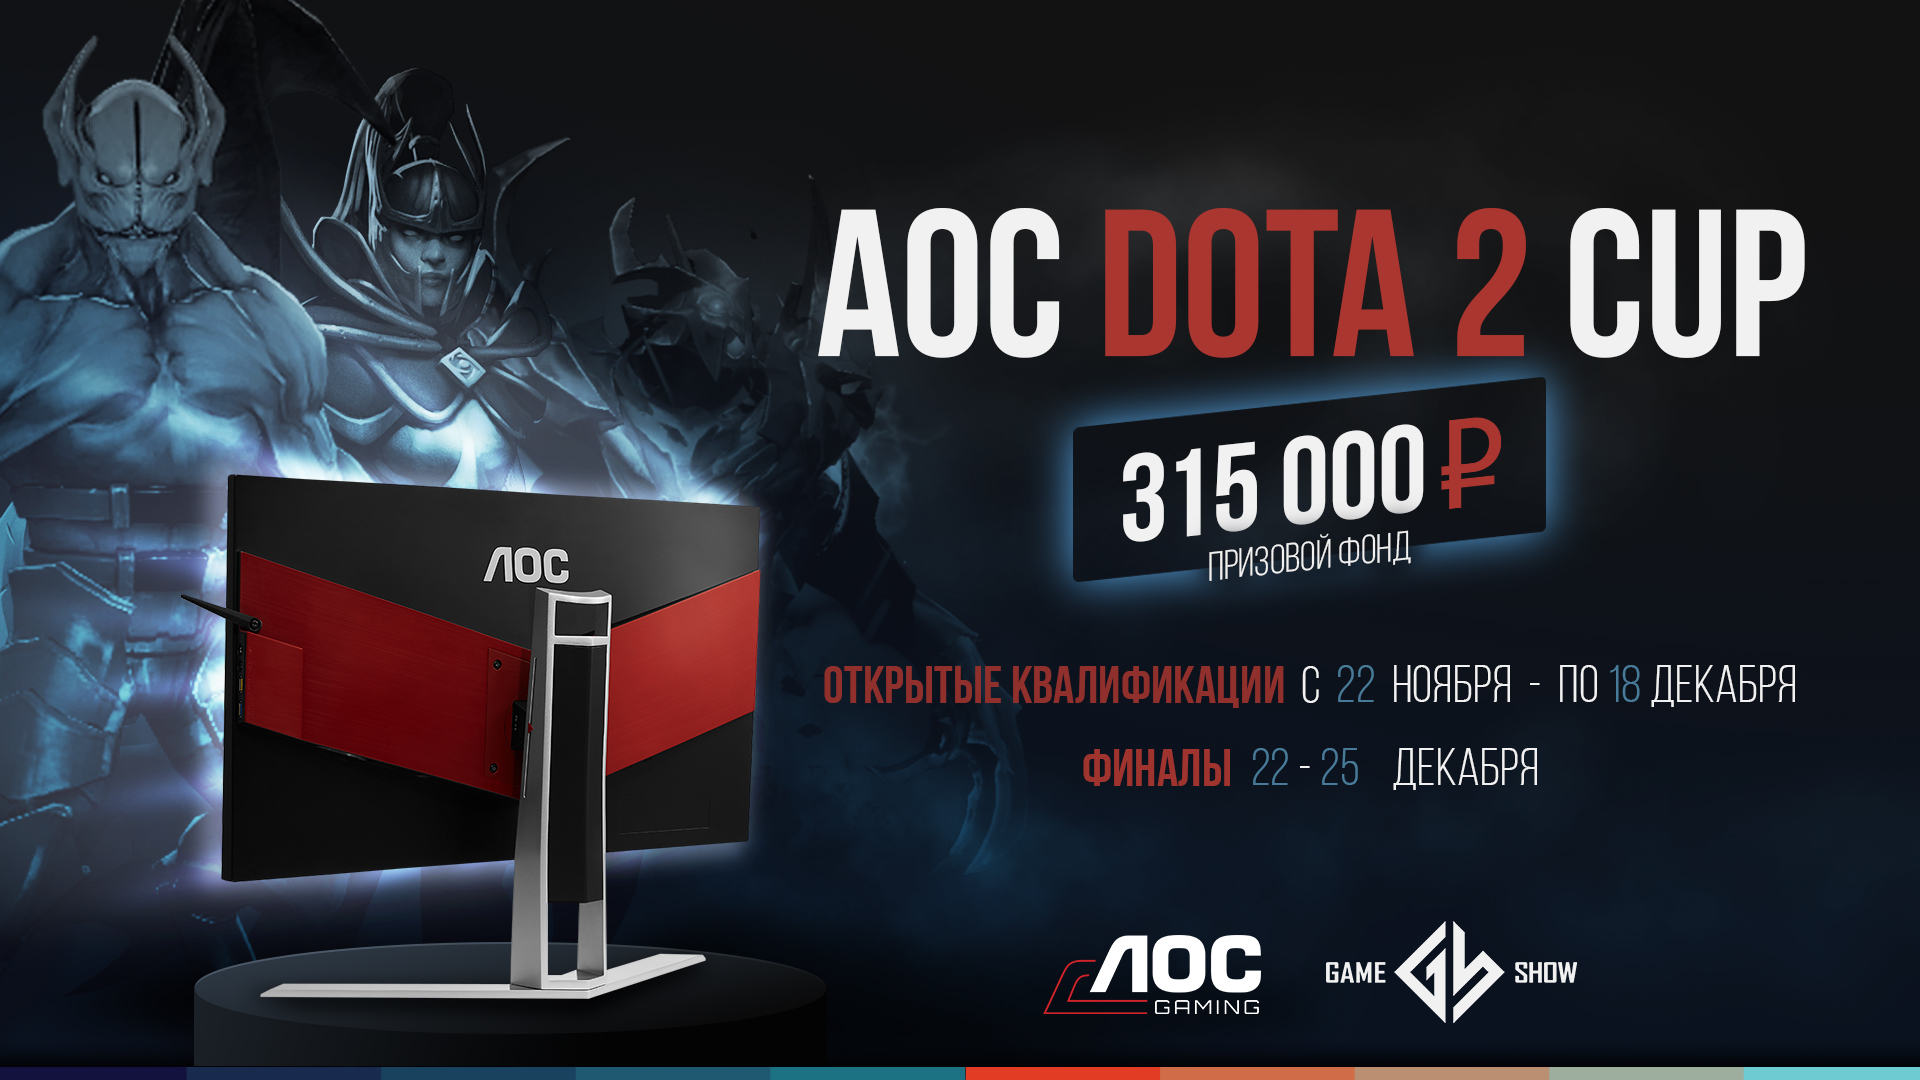 Qualifying Games Aoc Dota 2 Cup Start On November 22!